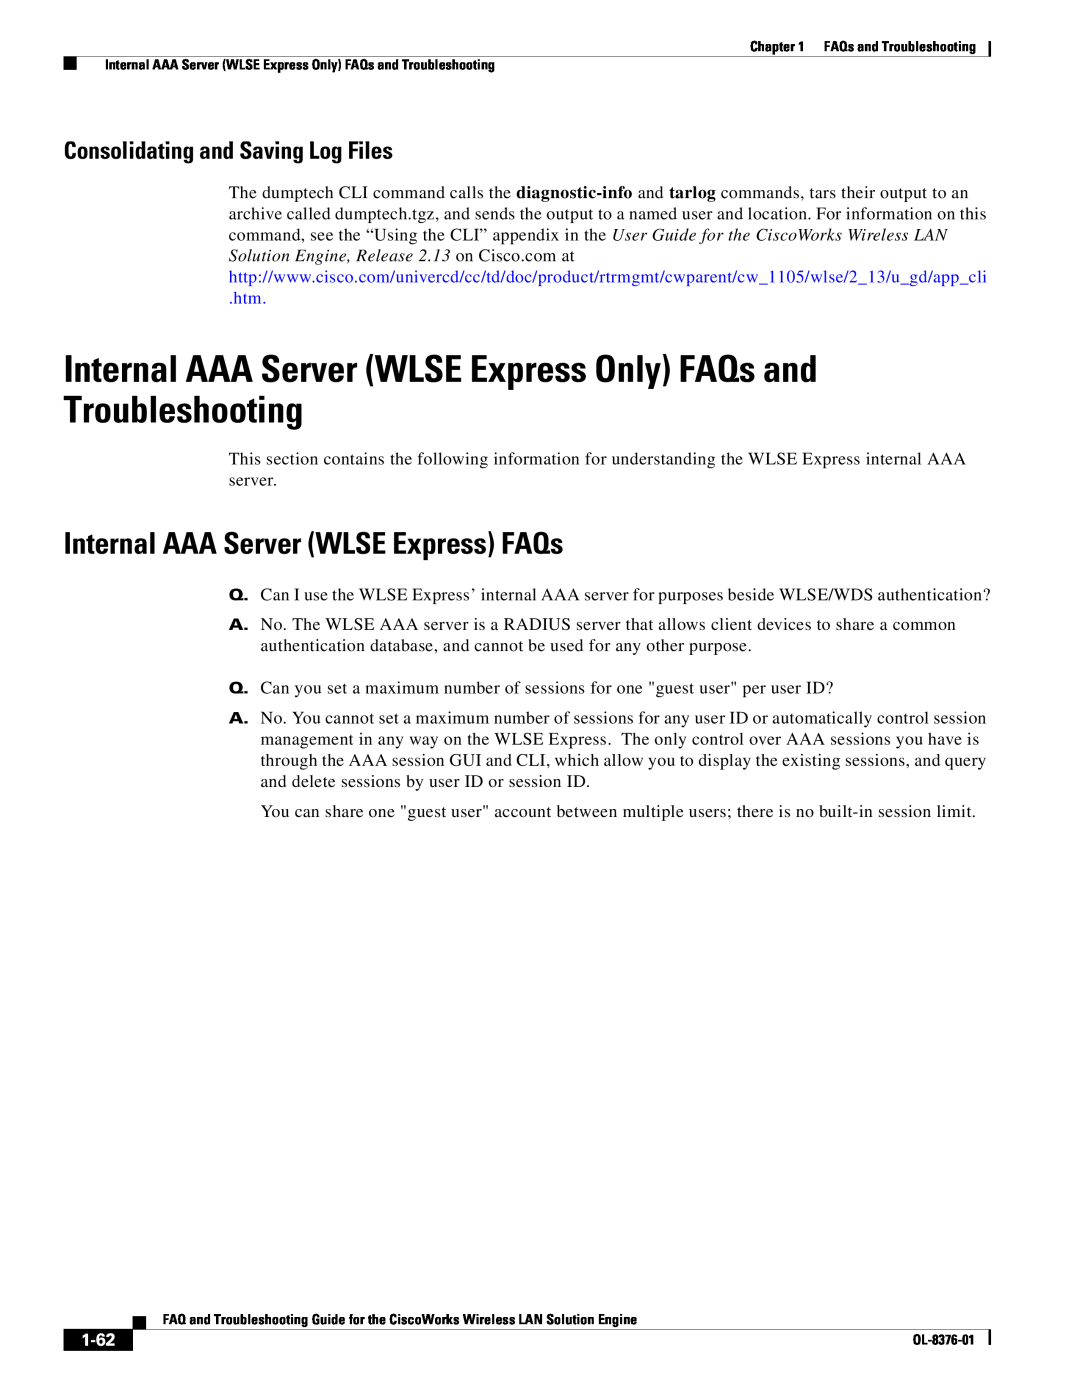 Cisco Systems OL-8376-01 manual Internal AAA Server WLSE Express FAQs, Consolidating and Saving Log Files, 1-62 